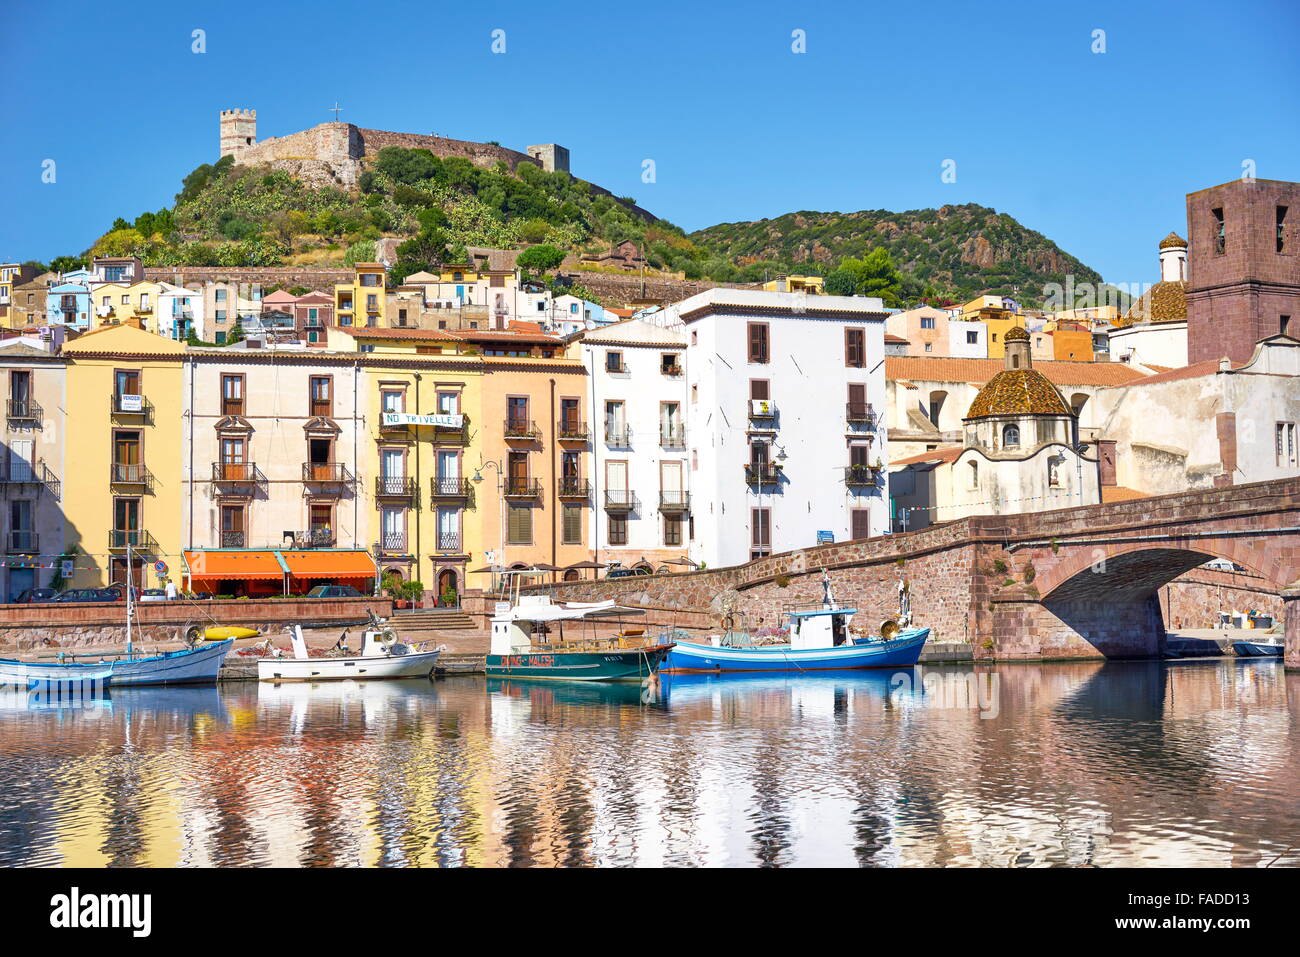 Bosa Old Town, view to Malaspina Castle, Riviera del Corallo, Sardegna (Sardinia Island), Italy Stock Photo